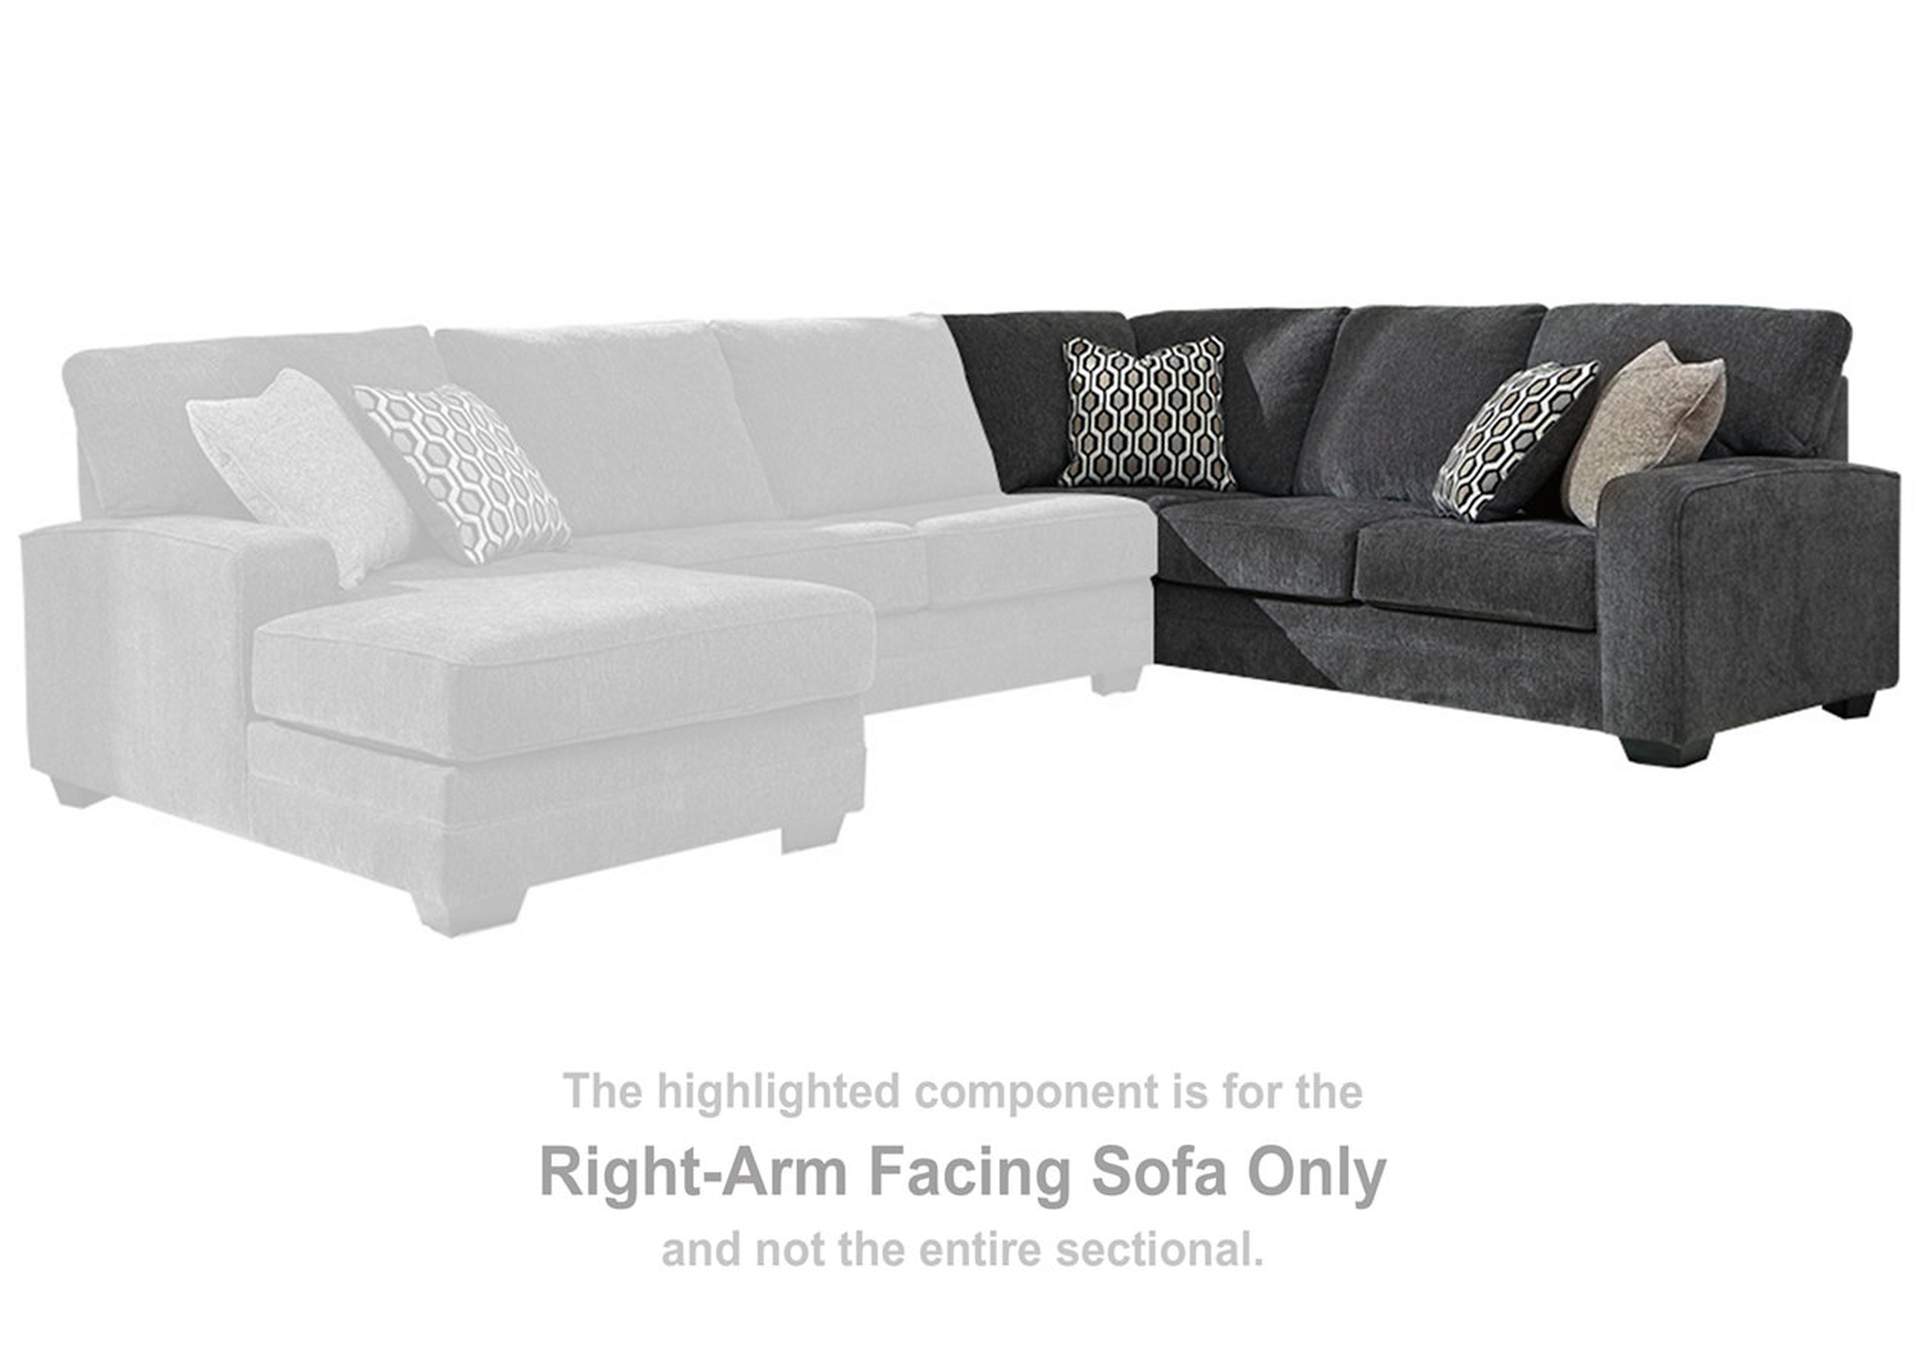 Tracling Right-Arm Facing Sofa,Benchcraft